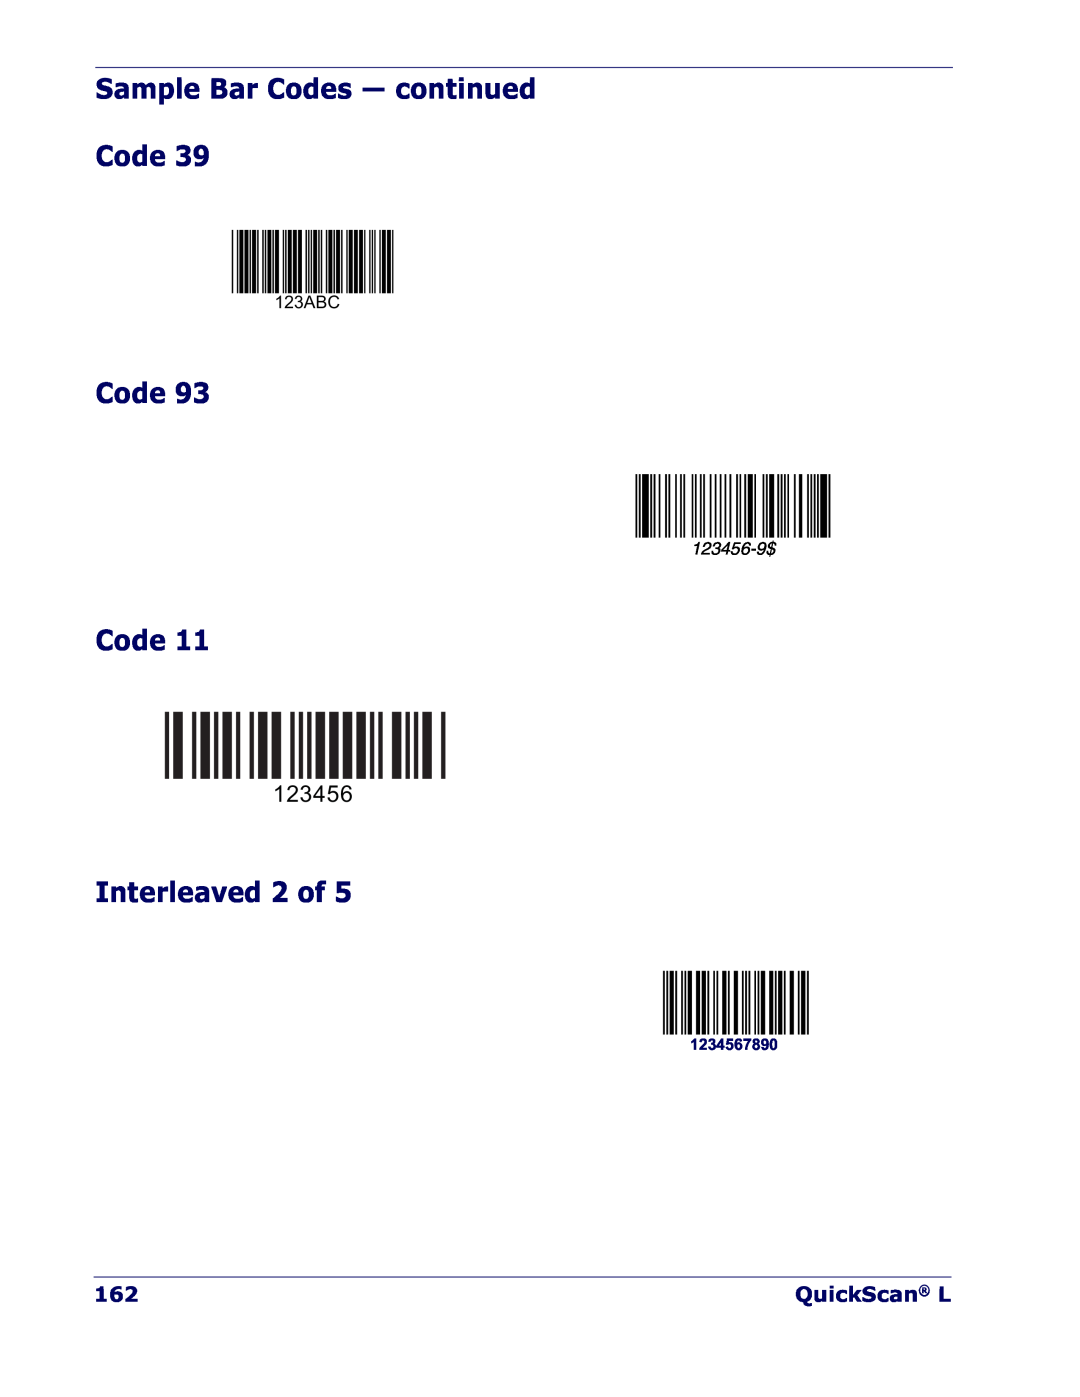 Datalogic Scanning QD 2300 manual Sample Bar Codes - continued Code, Interleaved 2 of, QuickScan L, 123ABC, 123456-9$ 